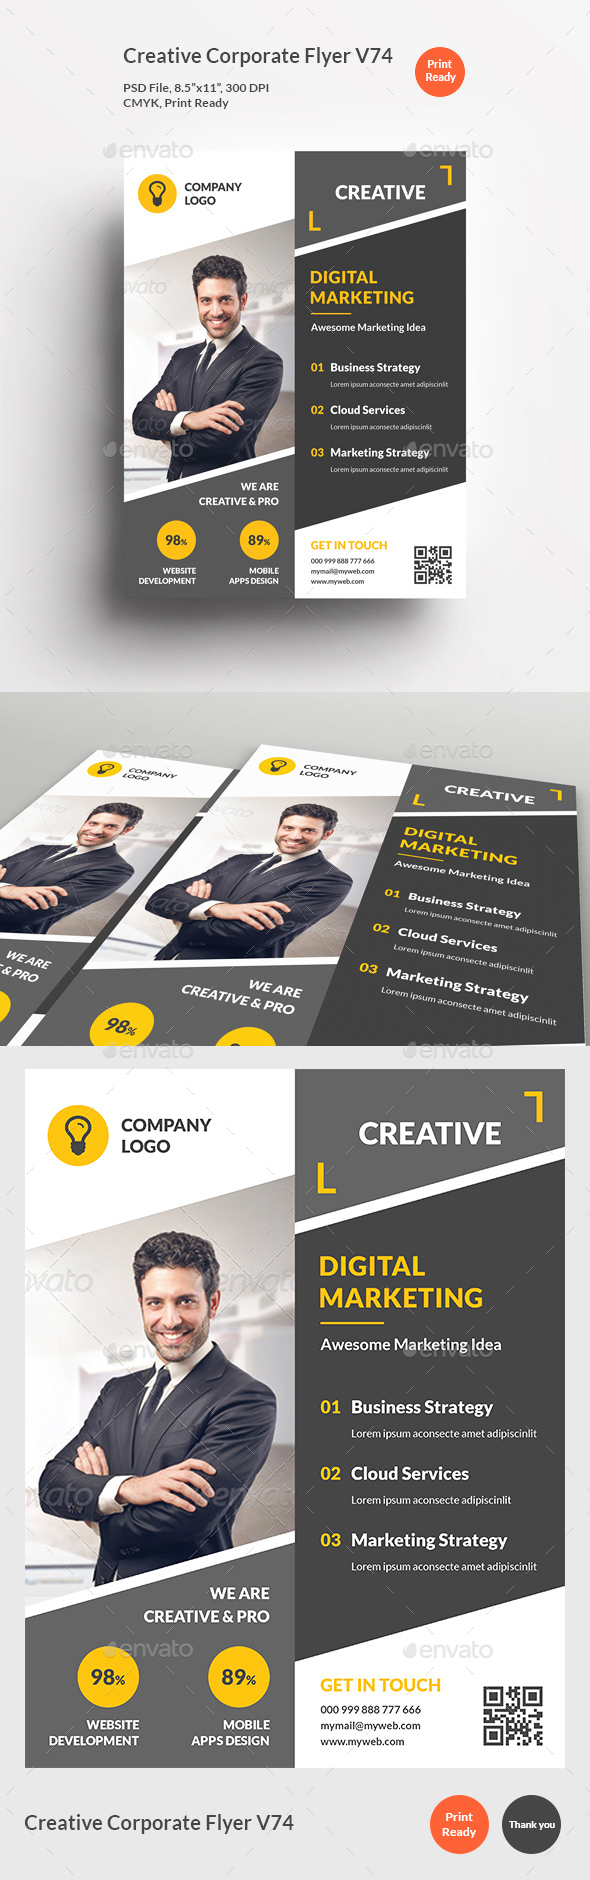 Creative Corporate Flyer V74